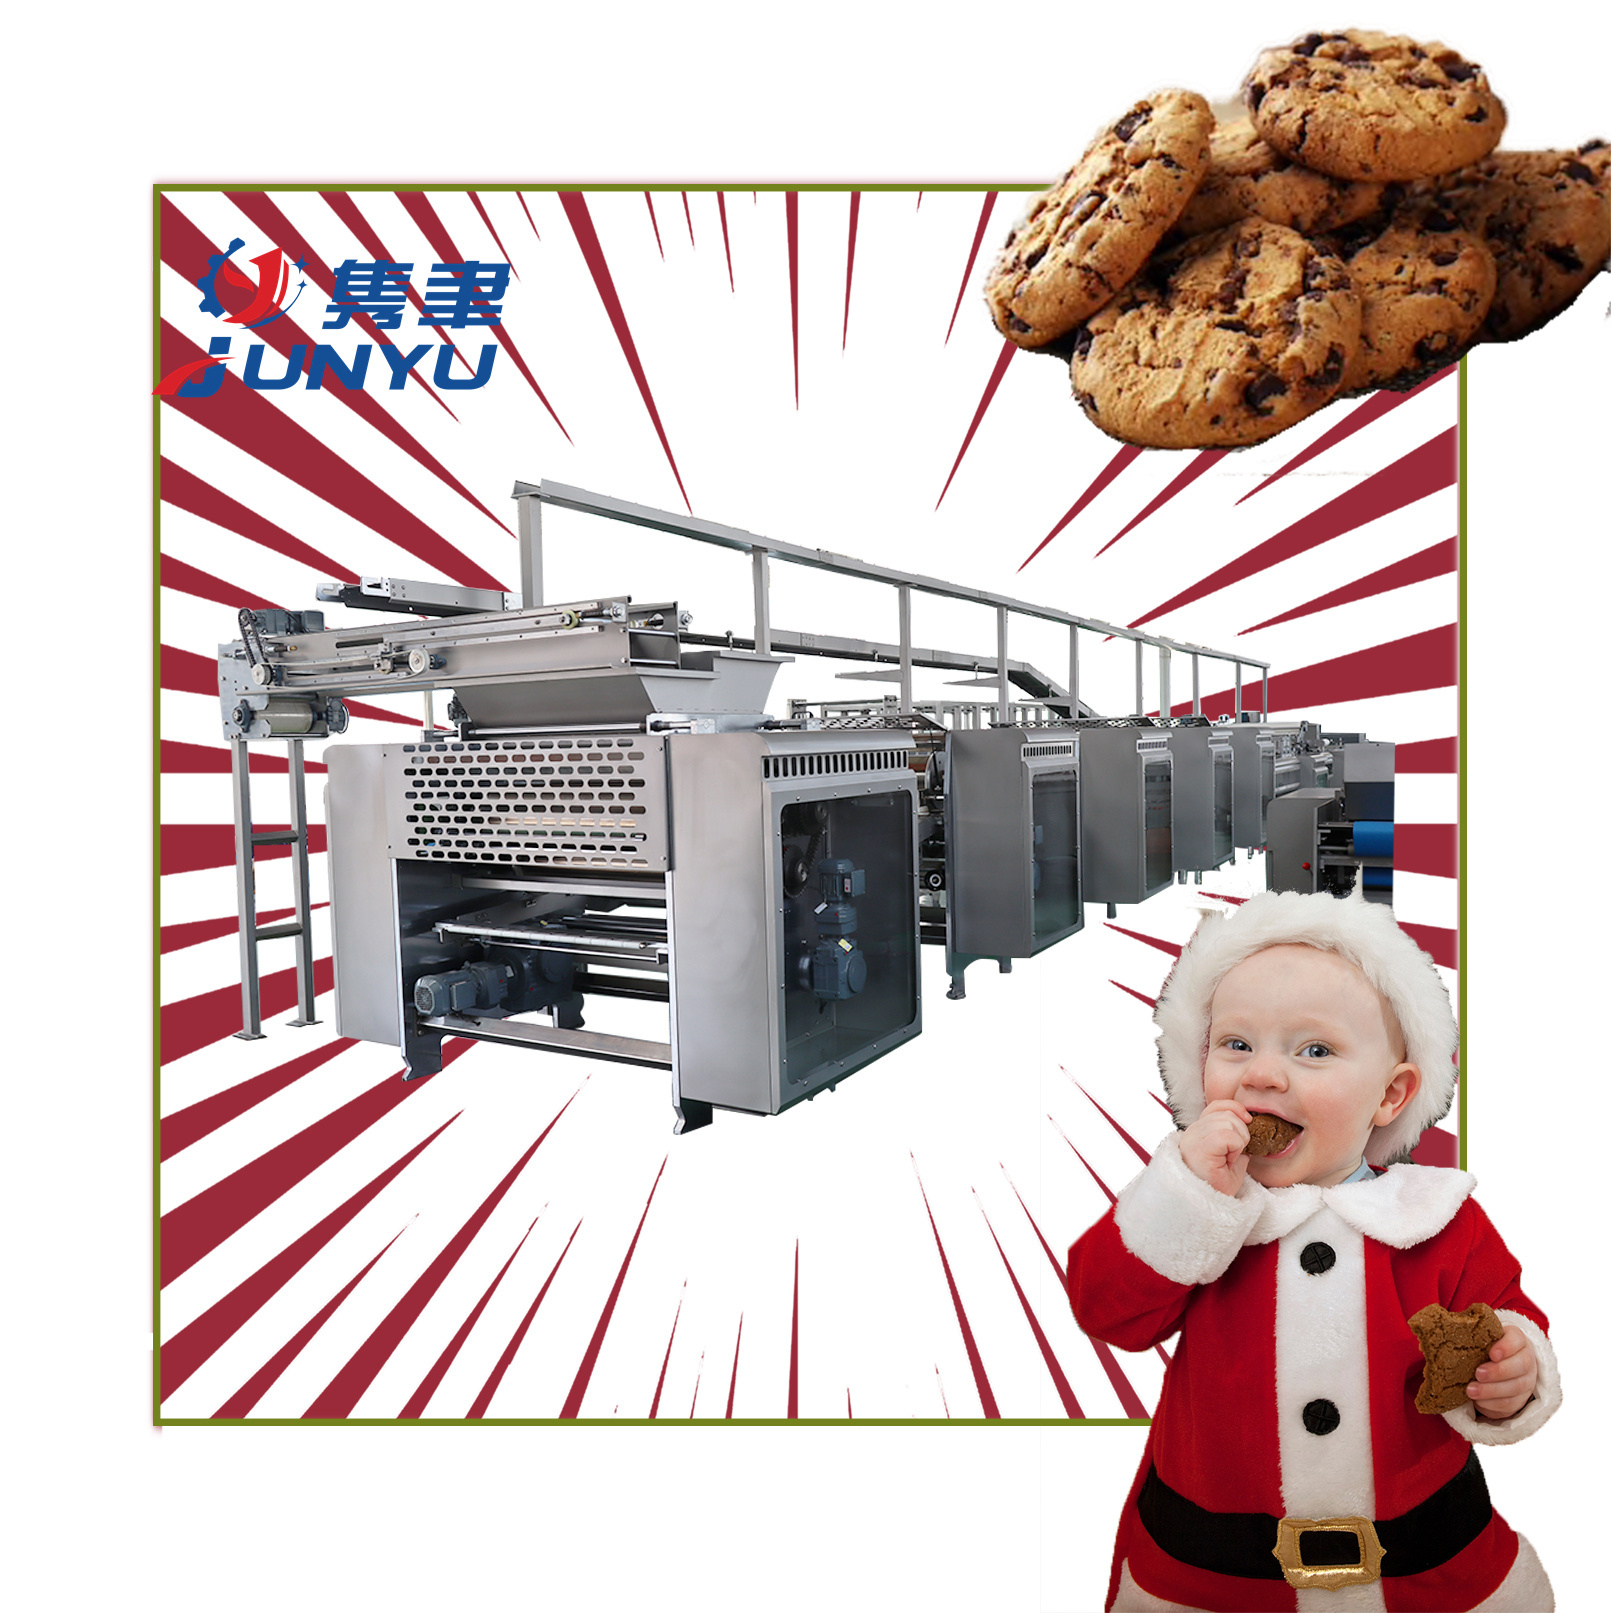 100kg/h cookies biscuit making machine making dough lamination machine biscuit machine price